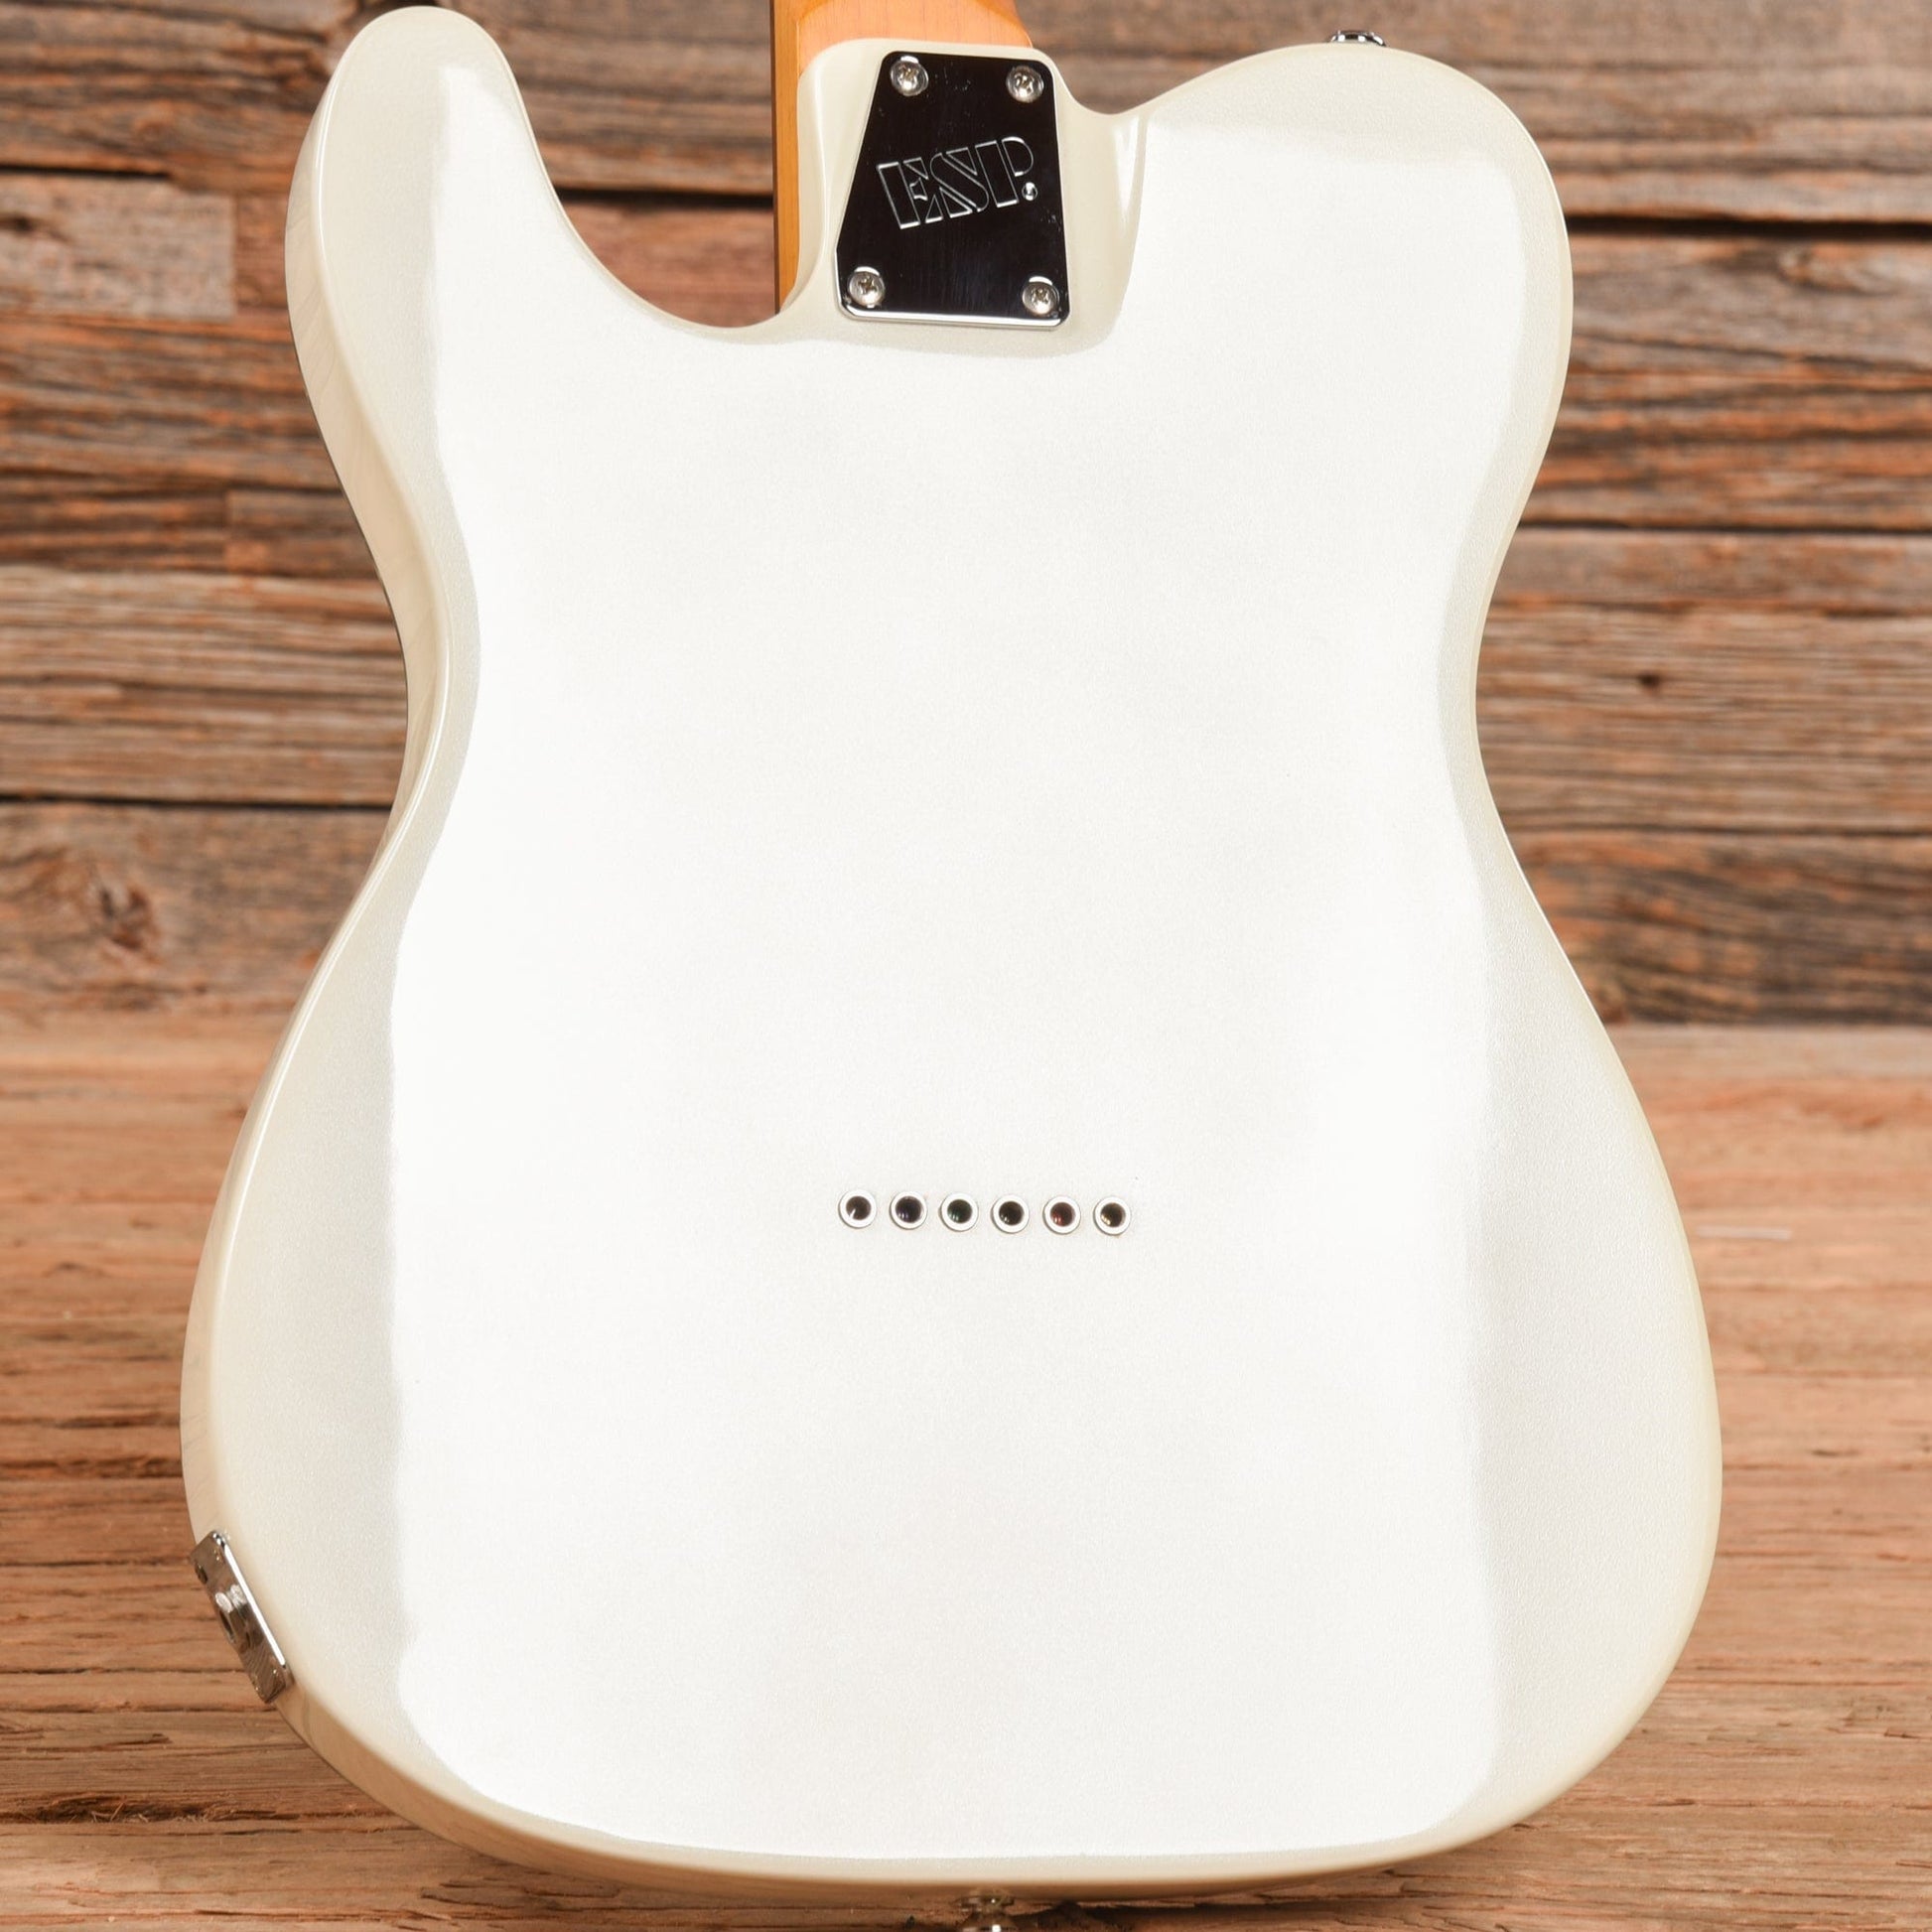 LTD TE-212 White 2011 Electric Guitars / Solid Body